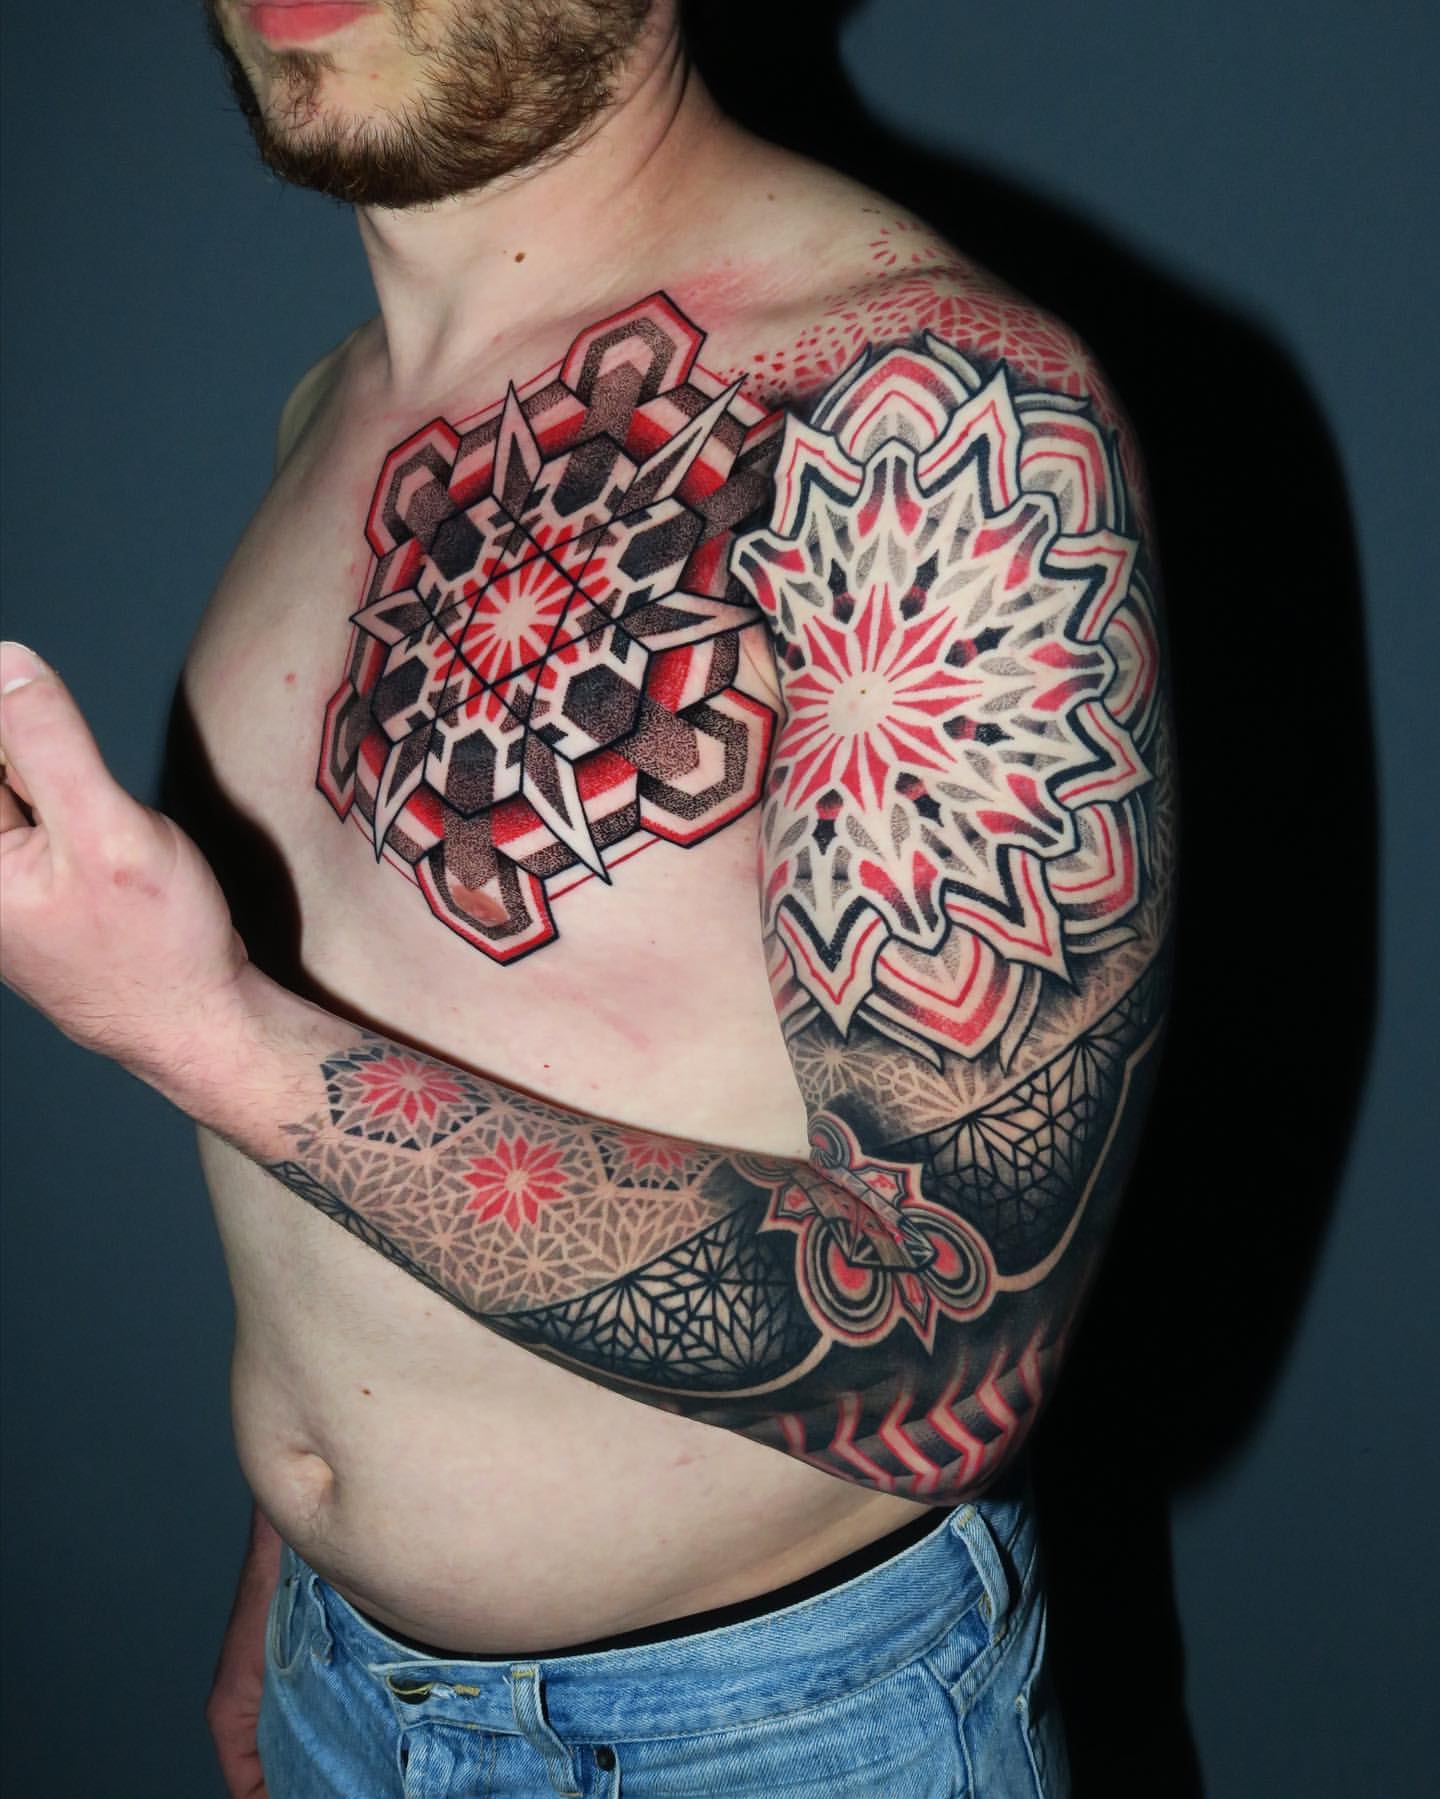 Heartbeatink Tattoo Magazine - Tattoos by @nissaco  ————————————————————⁣⁣⁣⁣⁣⁣⁣⁣⁣⁣⁣⁣⁣⁣⁣⁣⁣⁣⁣⁣ #heartbeatink  #heartbeatinktattoomagazine #japanesetattoo #japanesetattoos #tattoo # chesttattoo #chesttattoos #sleevetattoo #sleevetattoos #ink #tattoos ...